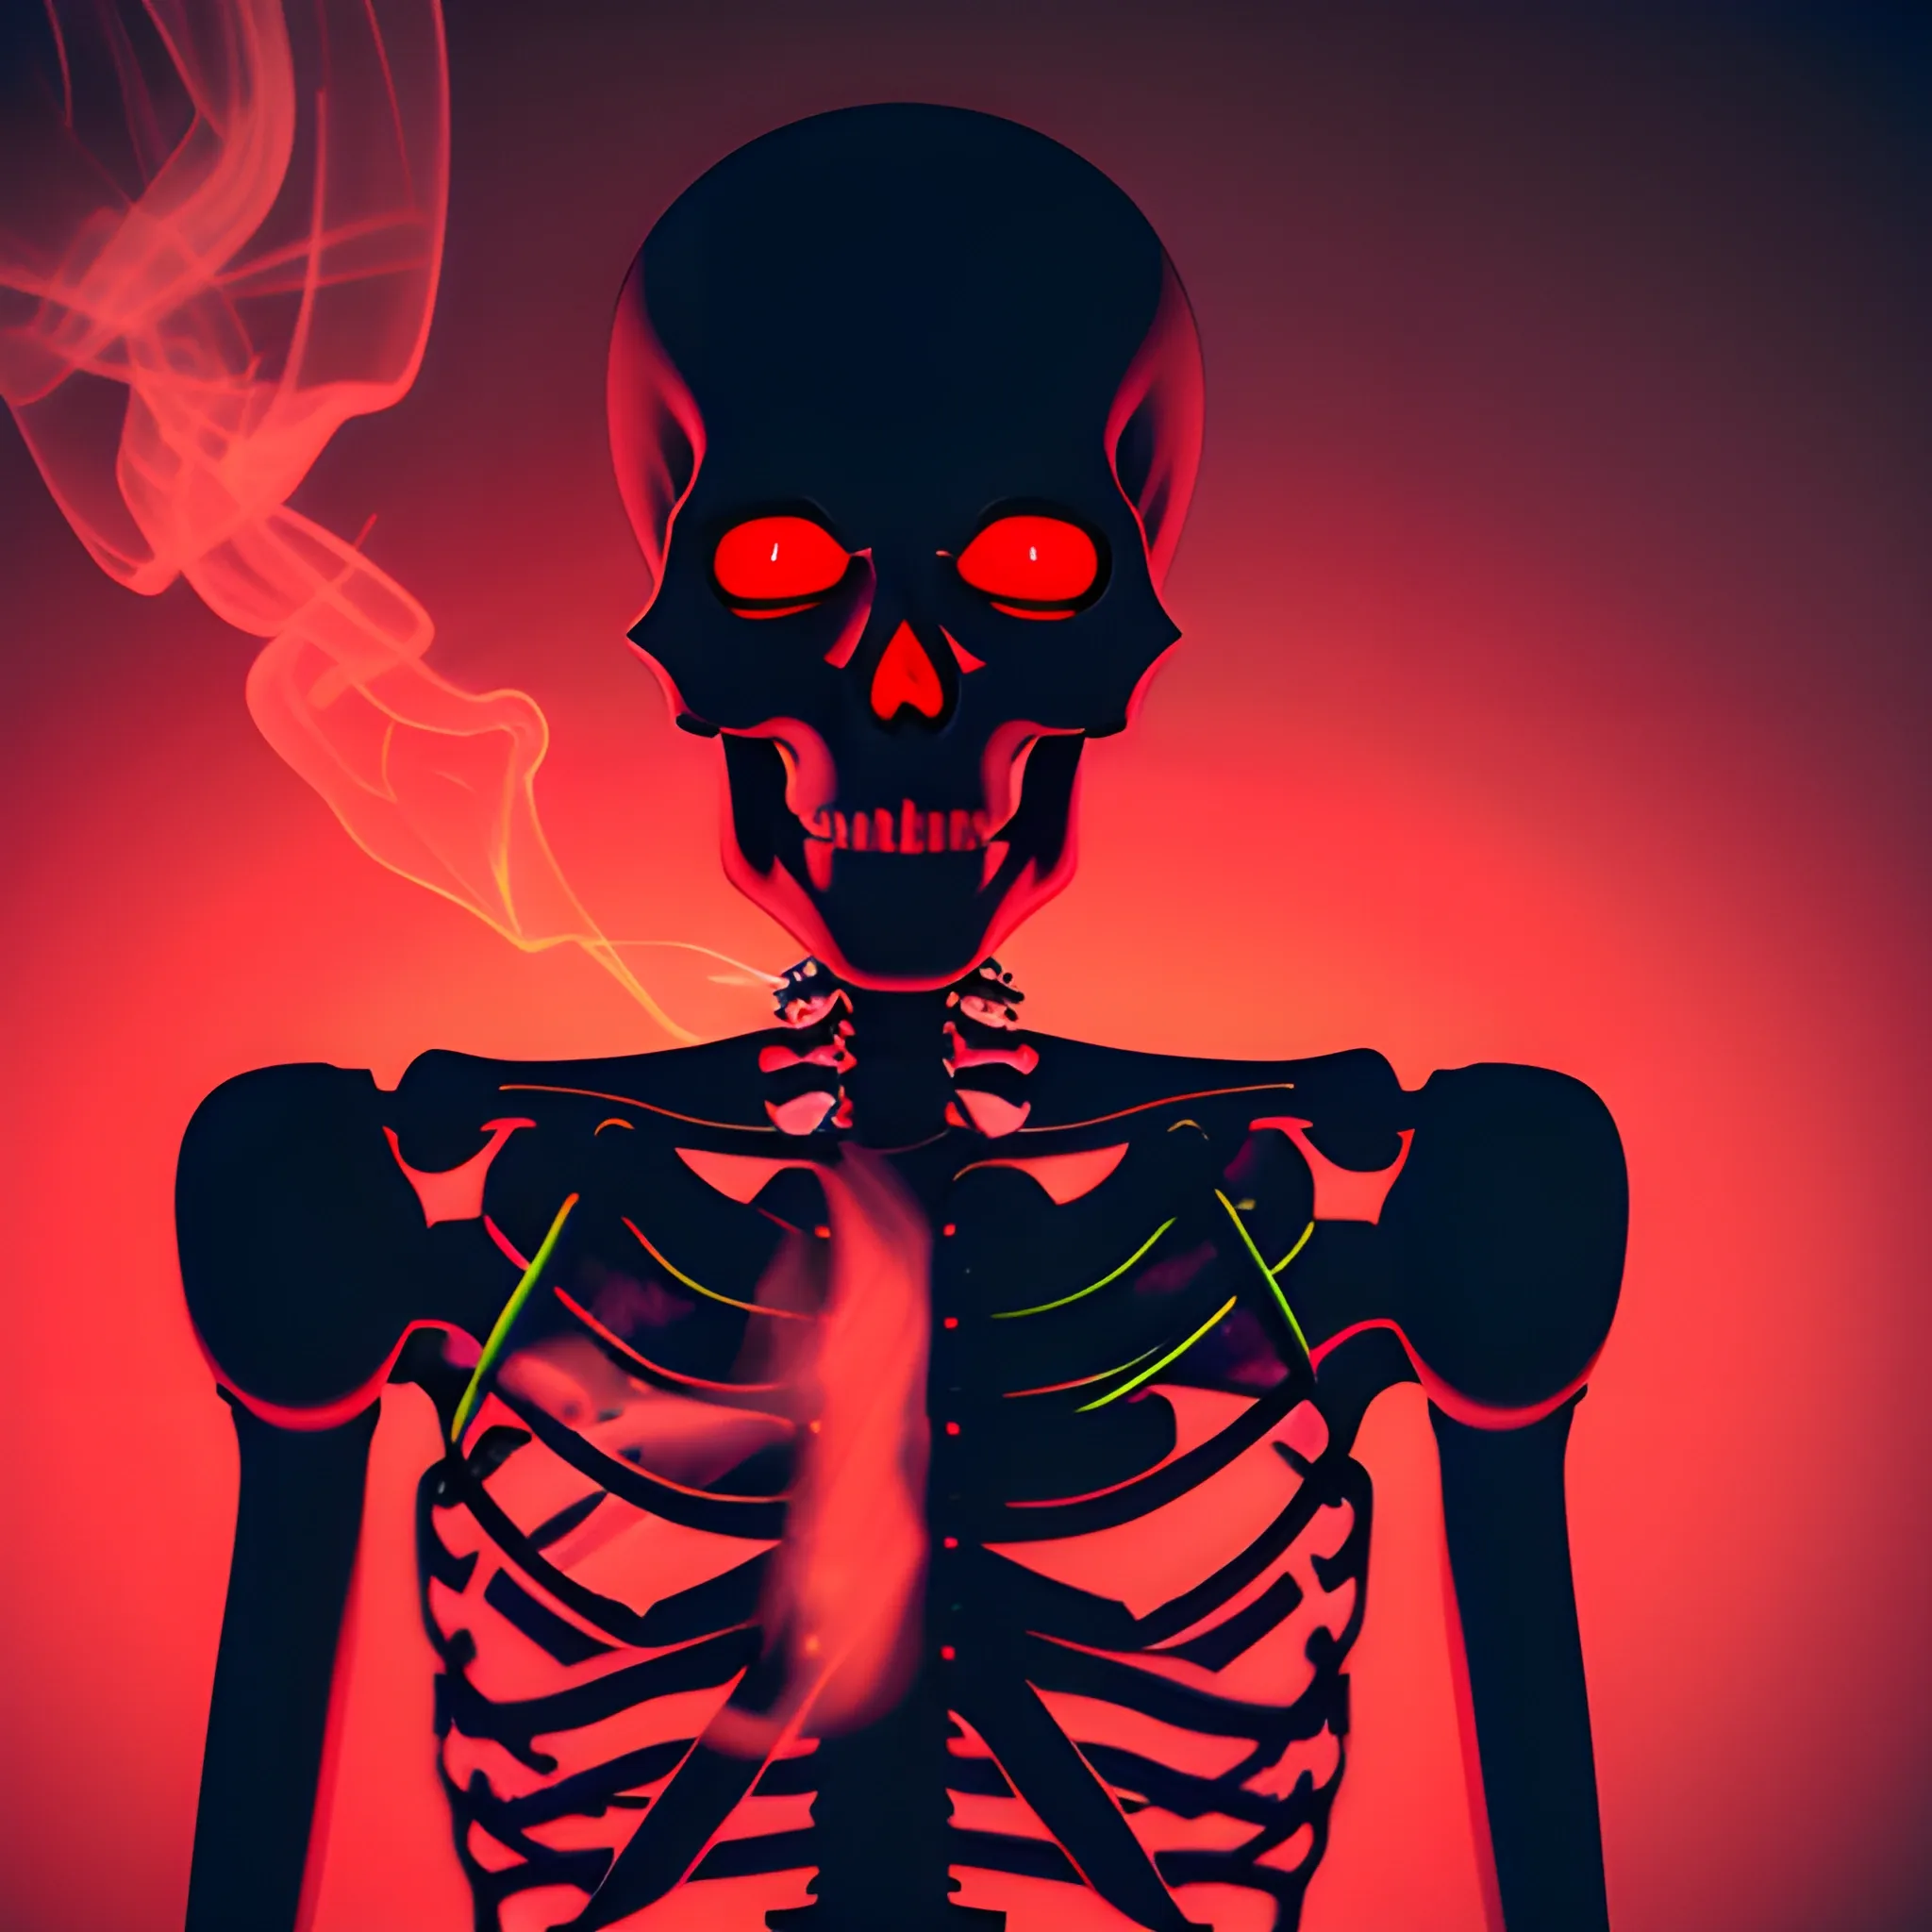 Skeleton red eyes glowing dark room smoking marijuana, 3D